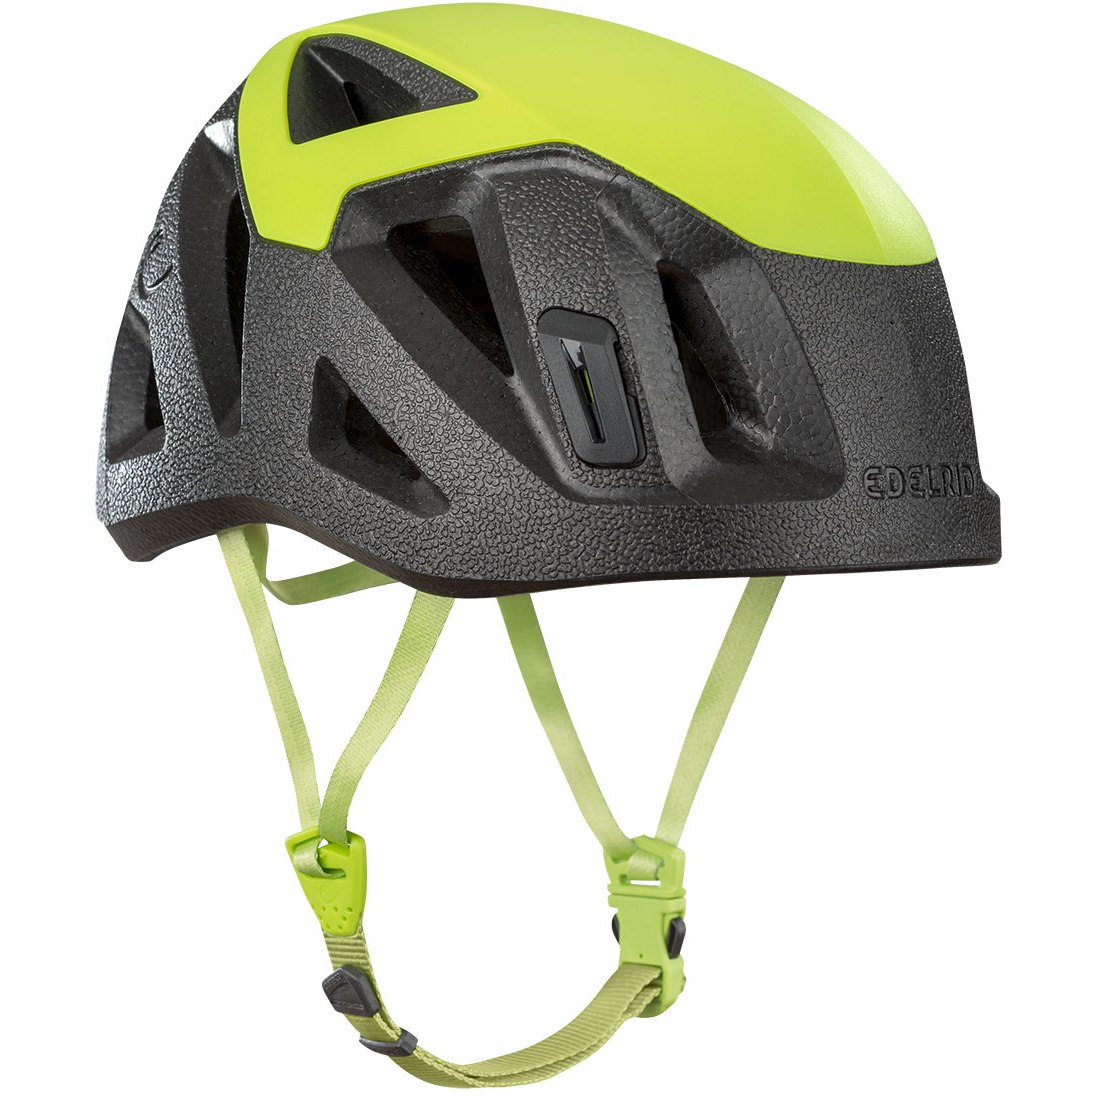 Image of Edelrid Salathe Climbing Helmet - oasis